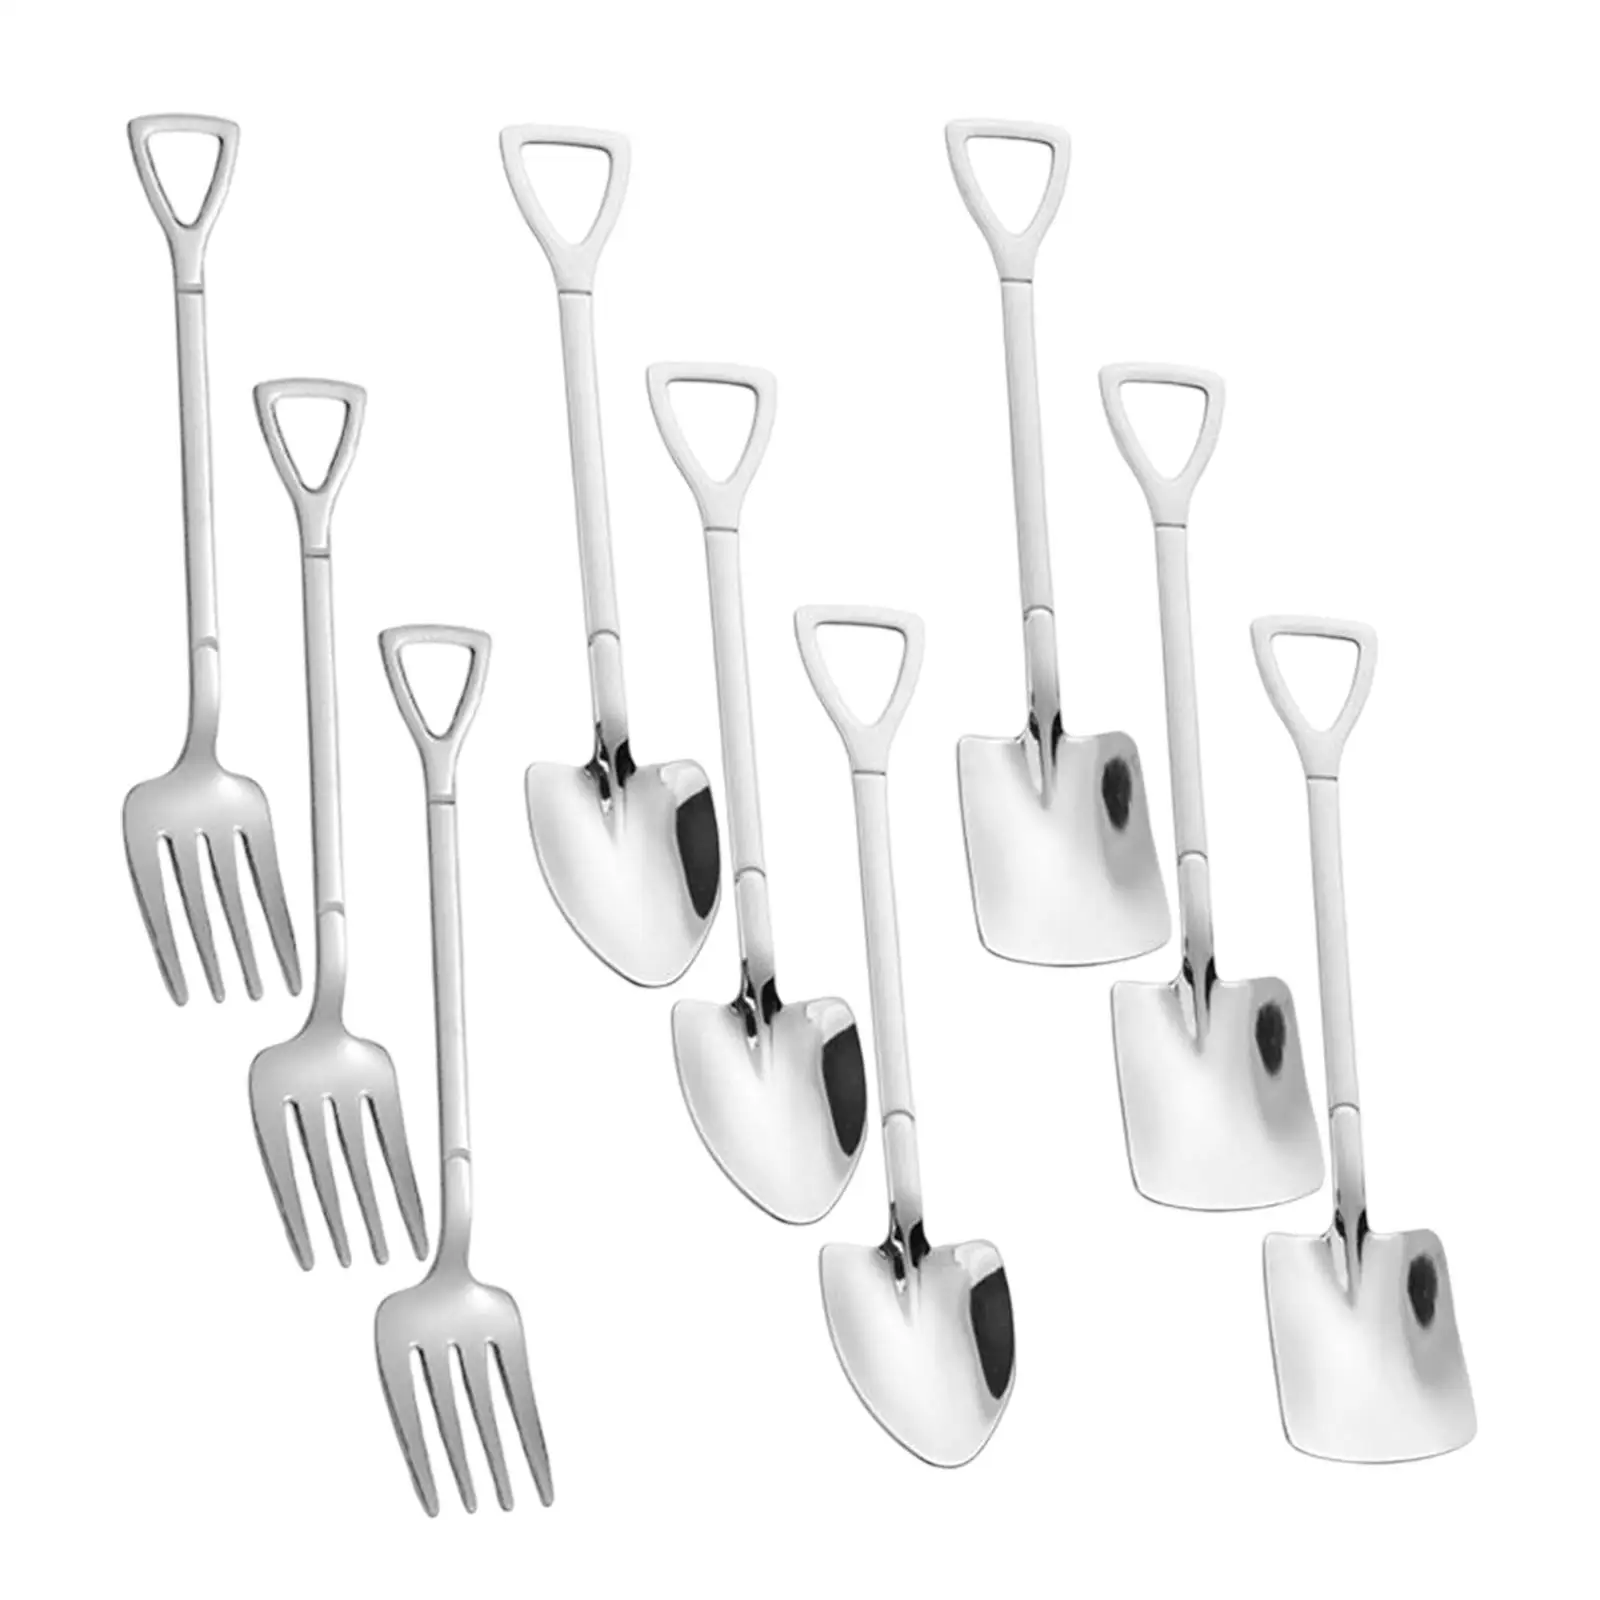 https://ae01.alicdn.com/kf/S3837aecc48ac46cf865cb734c0d8e688v/9x-Kitchen-Cutlery-Set-Tableware-Ice-Cream-Spoon-Utensils-Set-for-Dining-Room-Home-Wedding.jpg